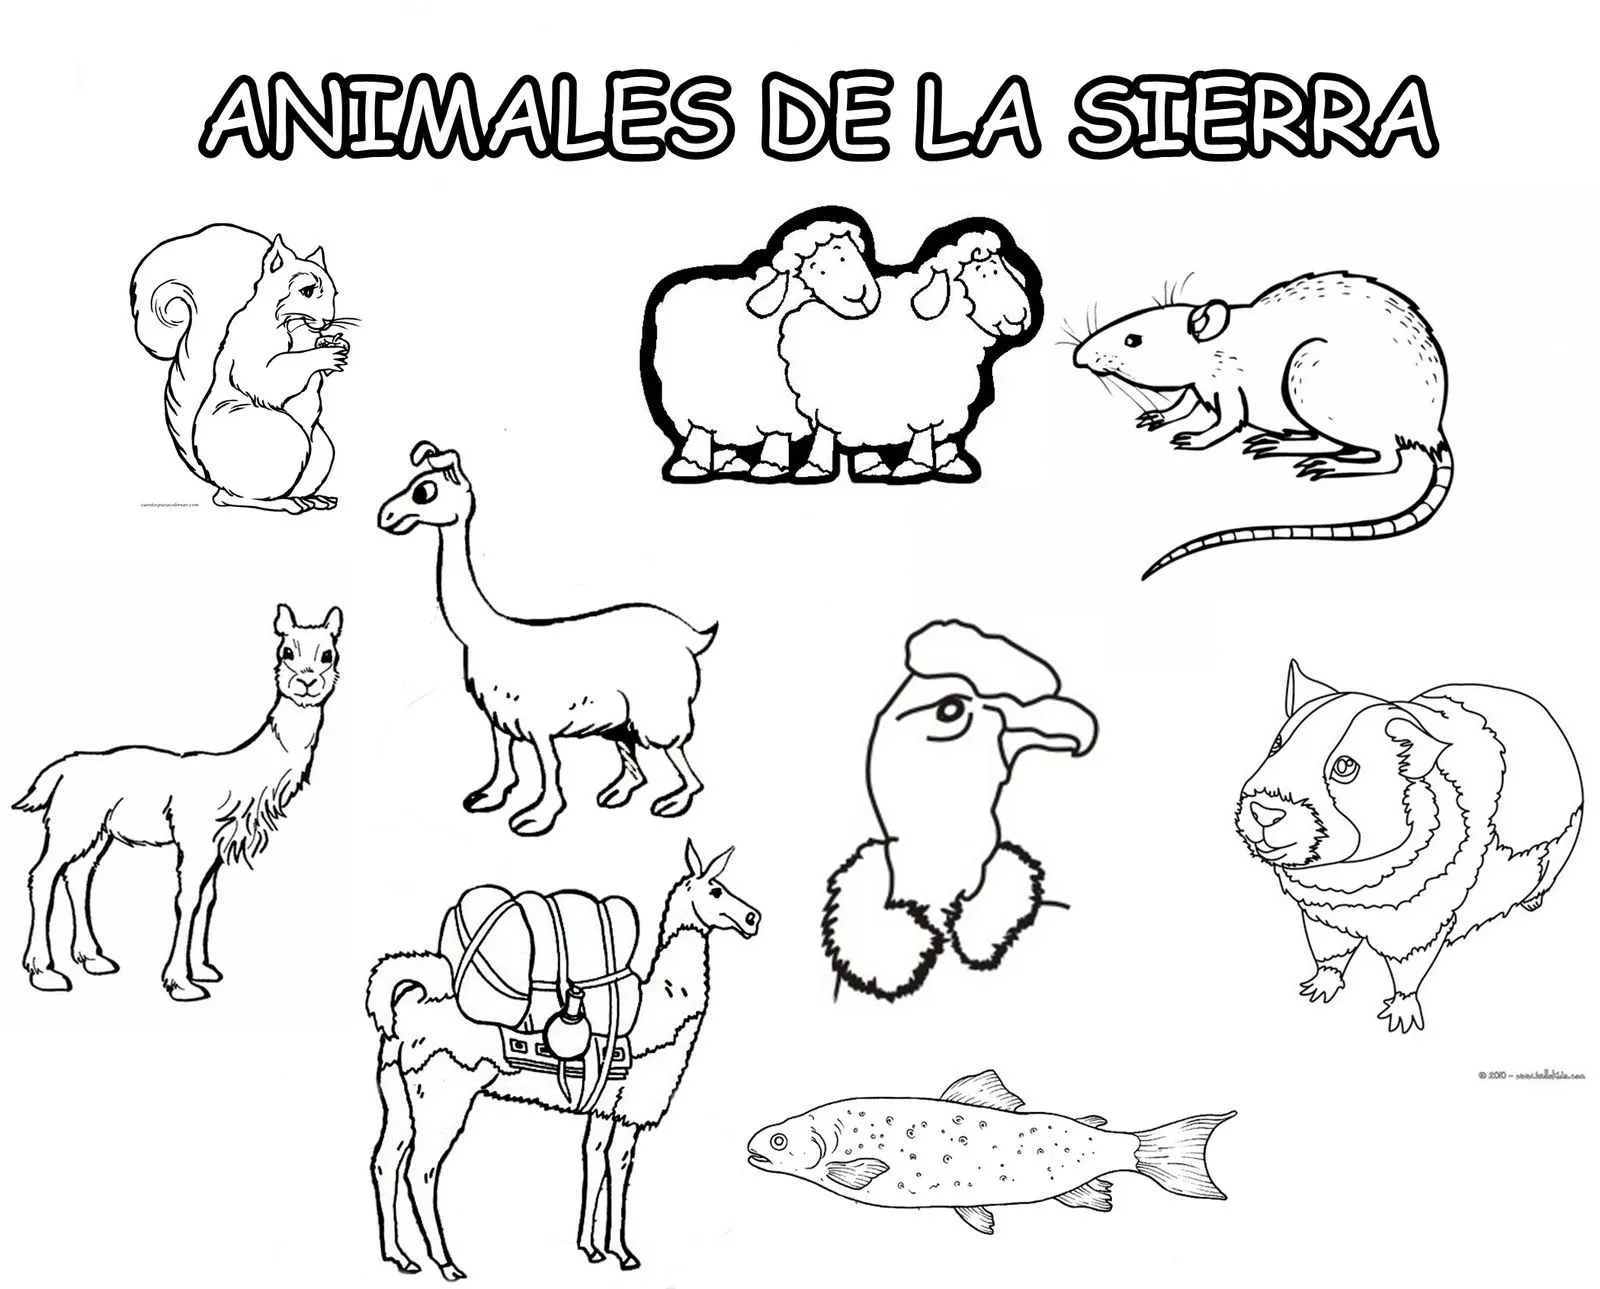 Animales de la sierra peruana para colorear - Imagui